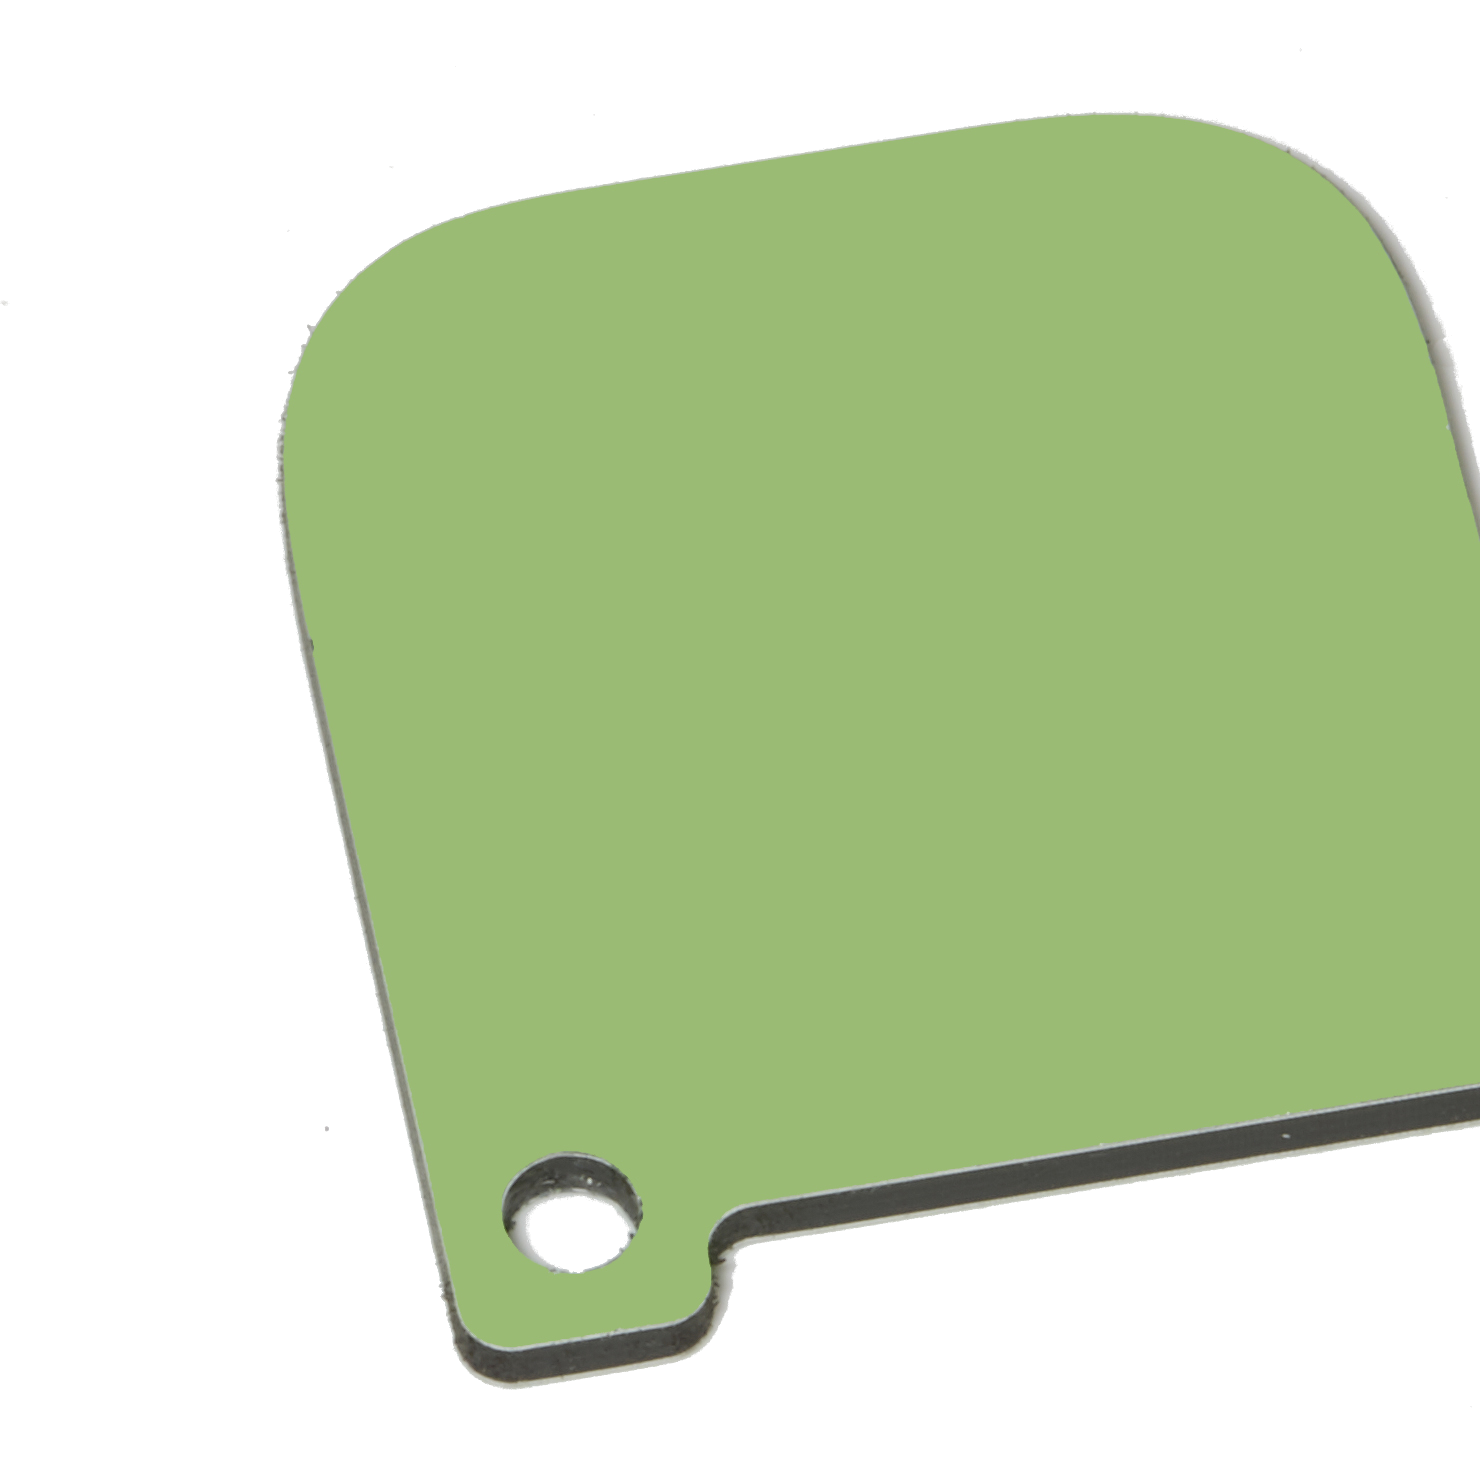 Iribond ACM Lime Green Matt/Gloss Sheet | Plastock